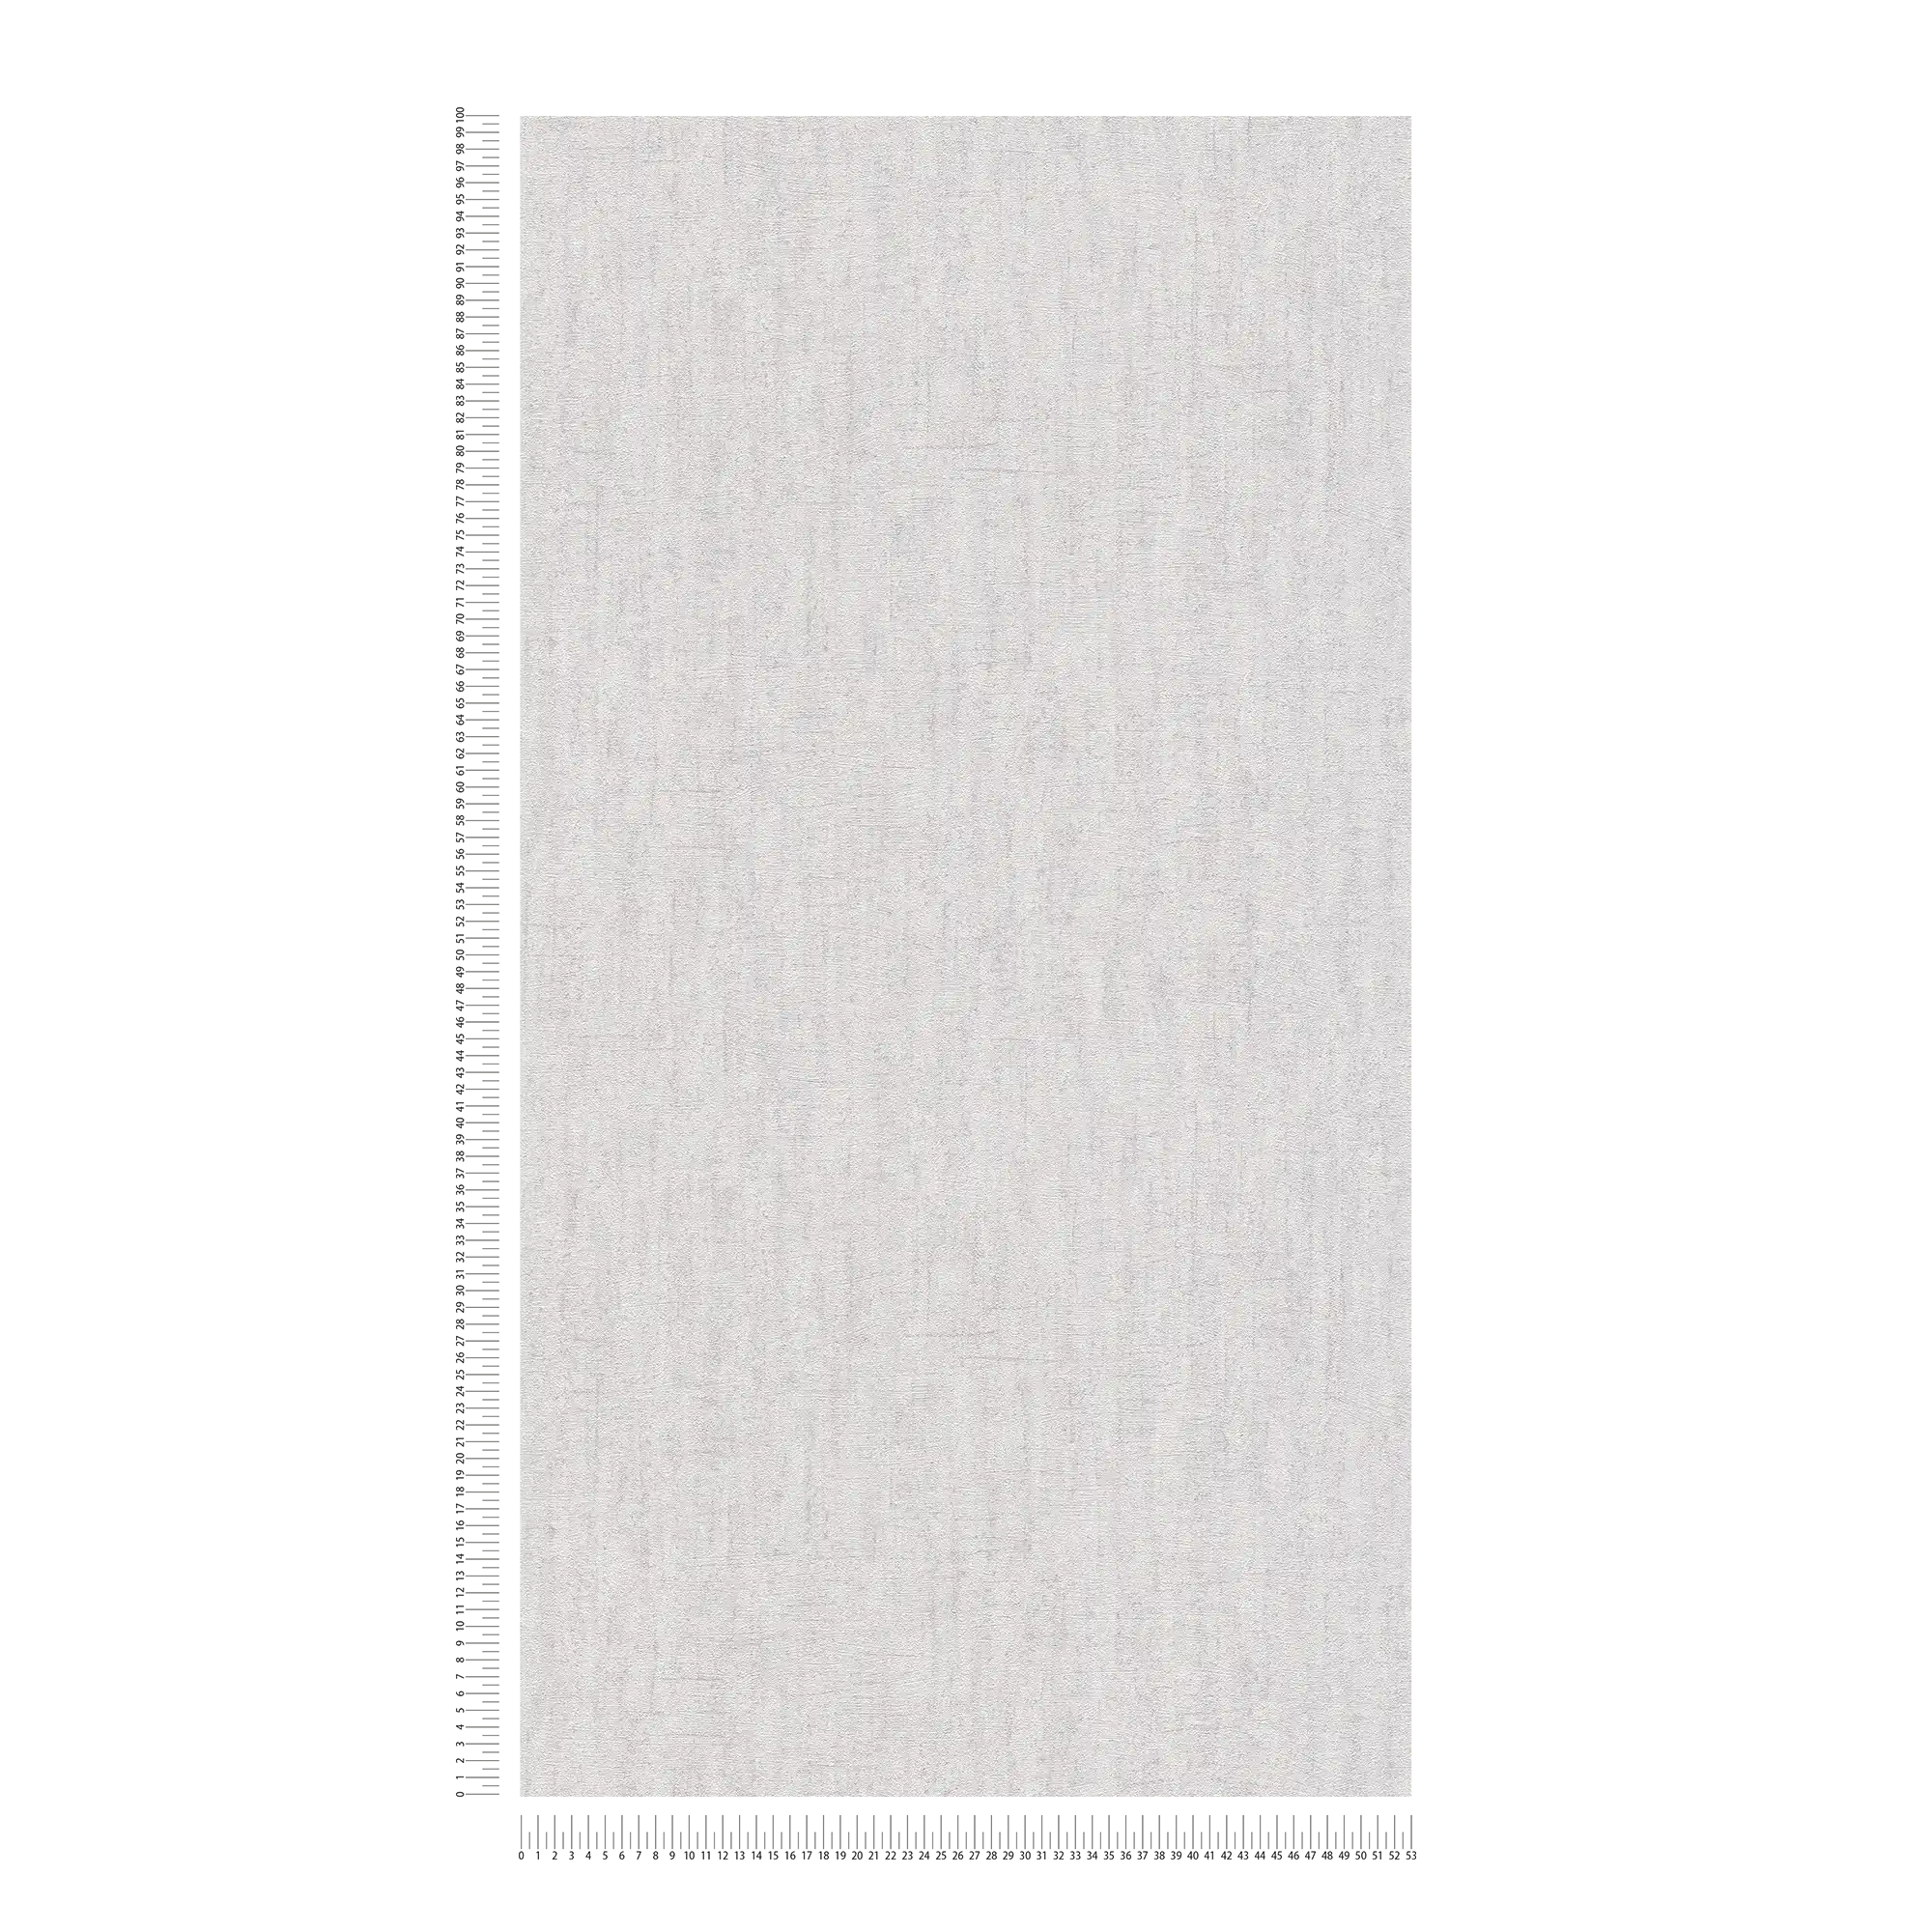             Hellgraue Vliestapete glänzend mit Strukturmuster – Grau
        